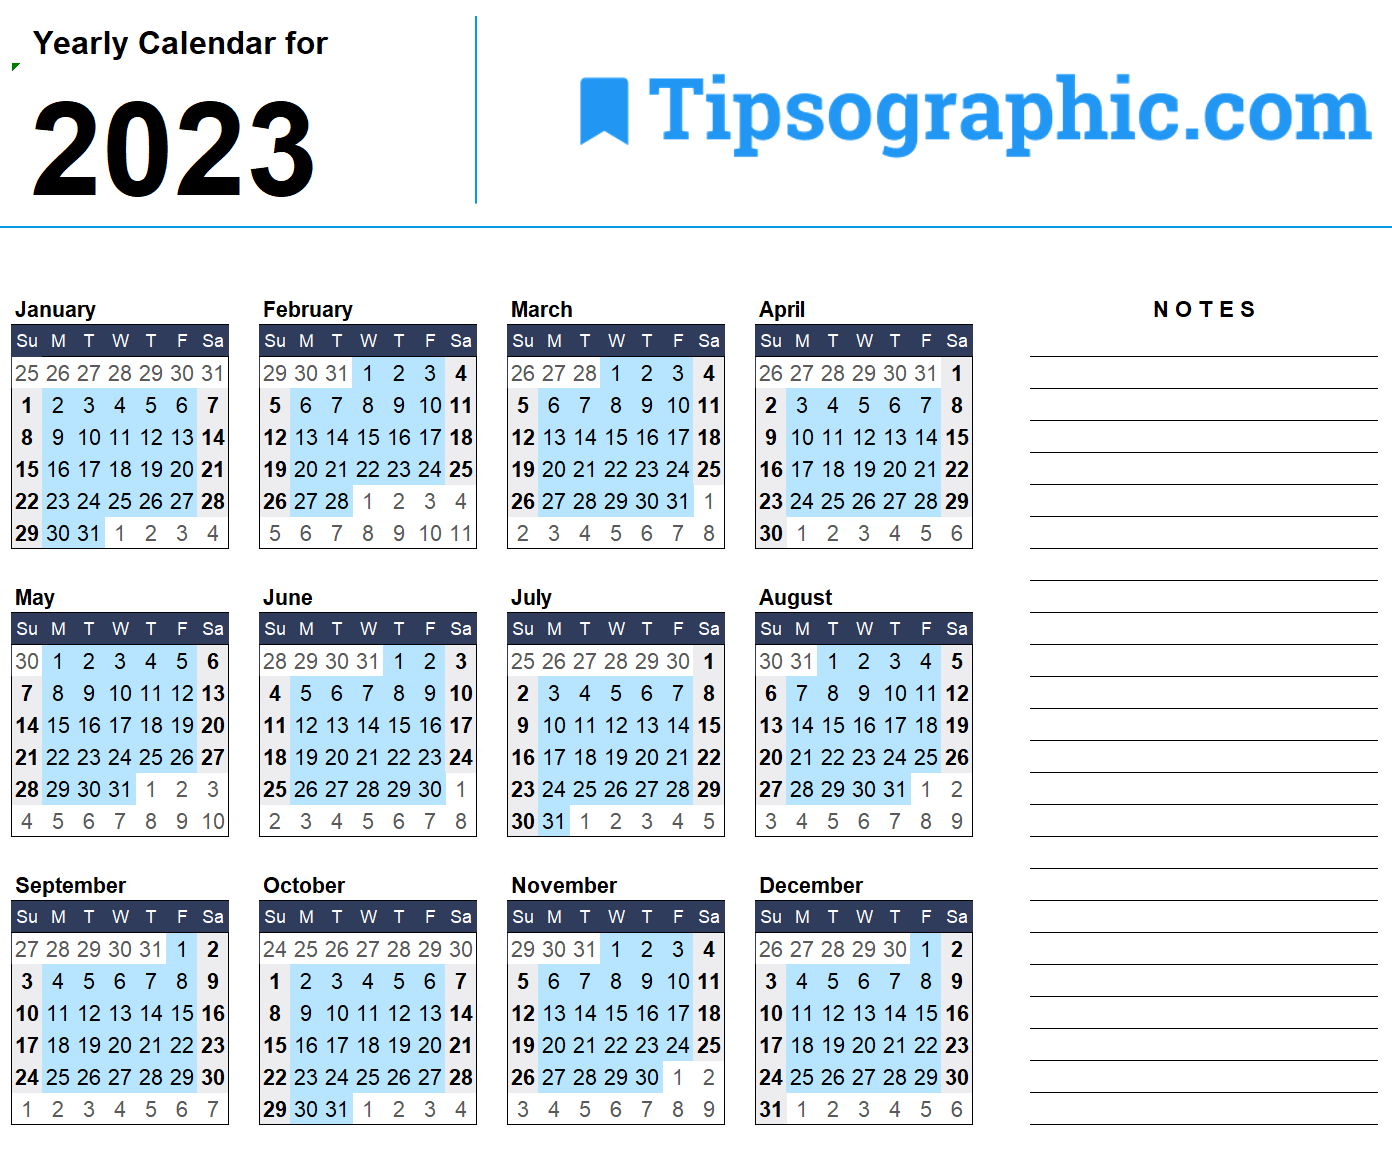 2023 calendar pdf word excel - 2023 calendar templates and images ...